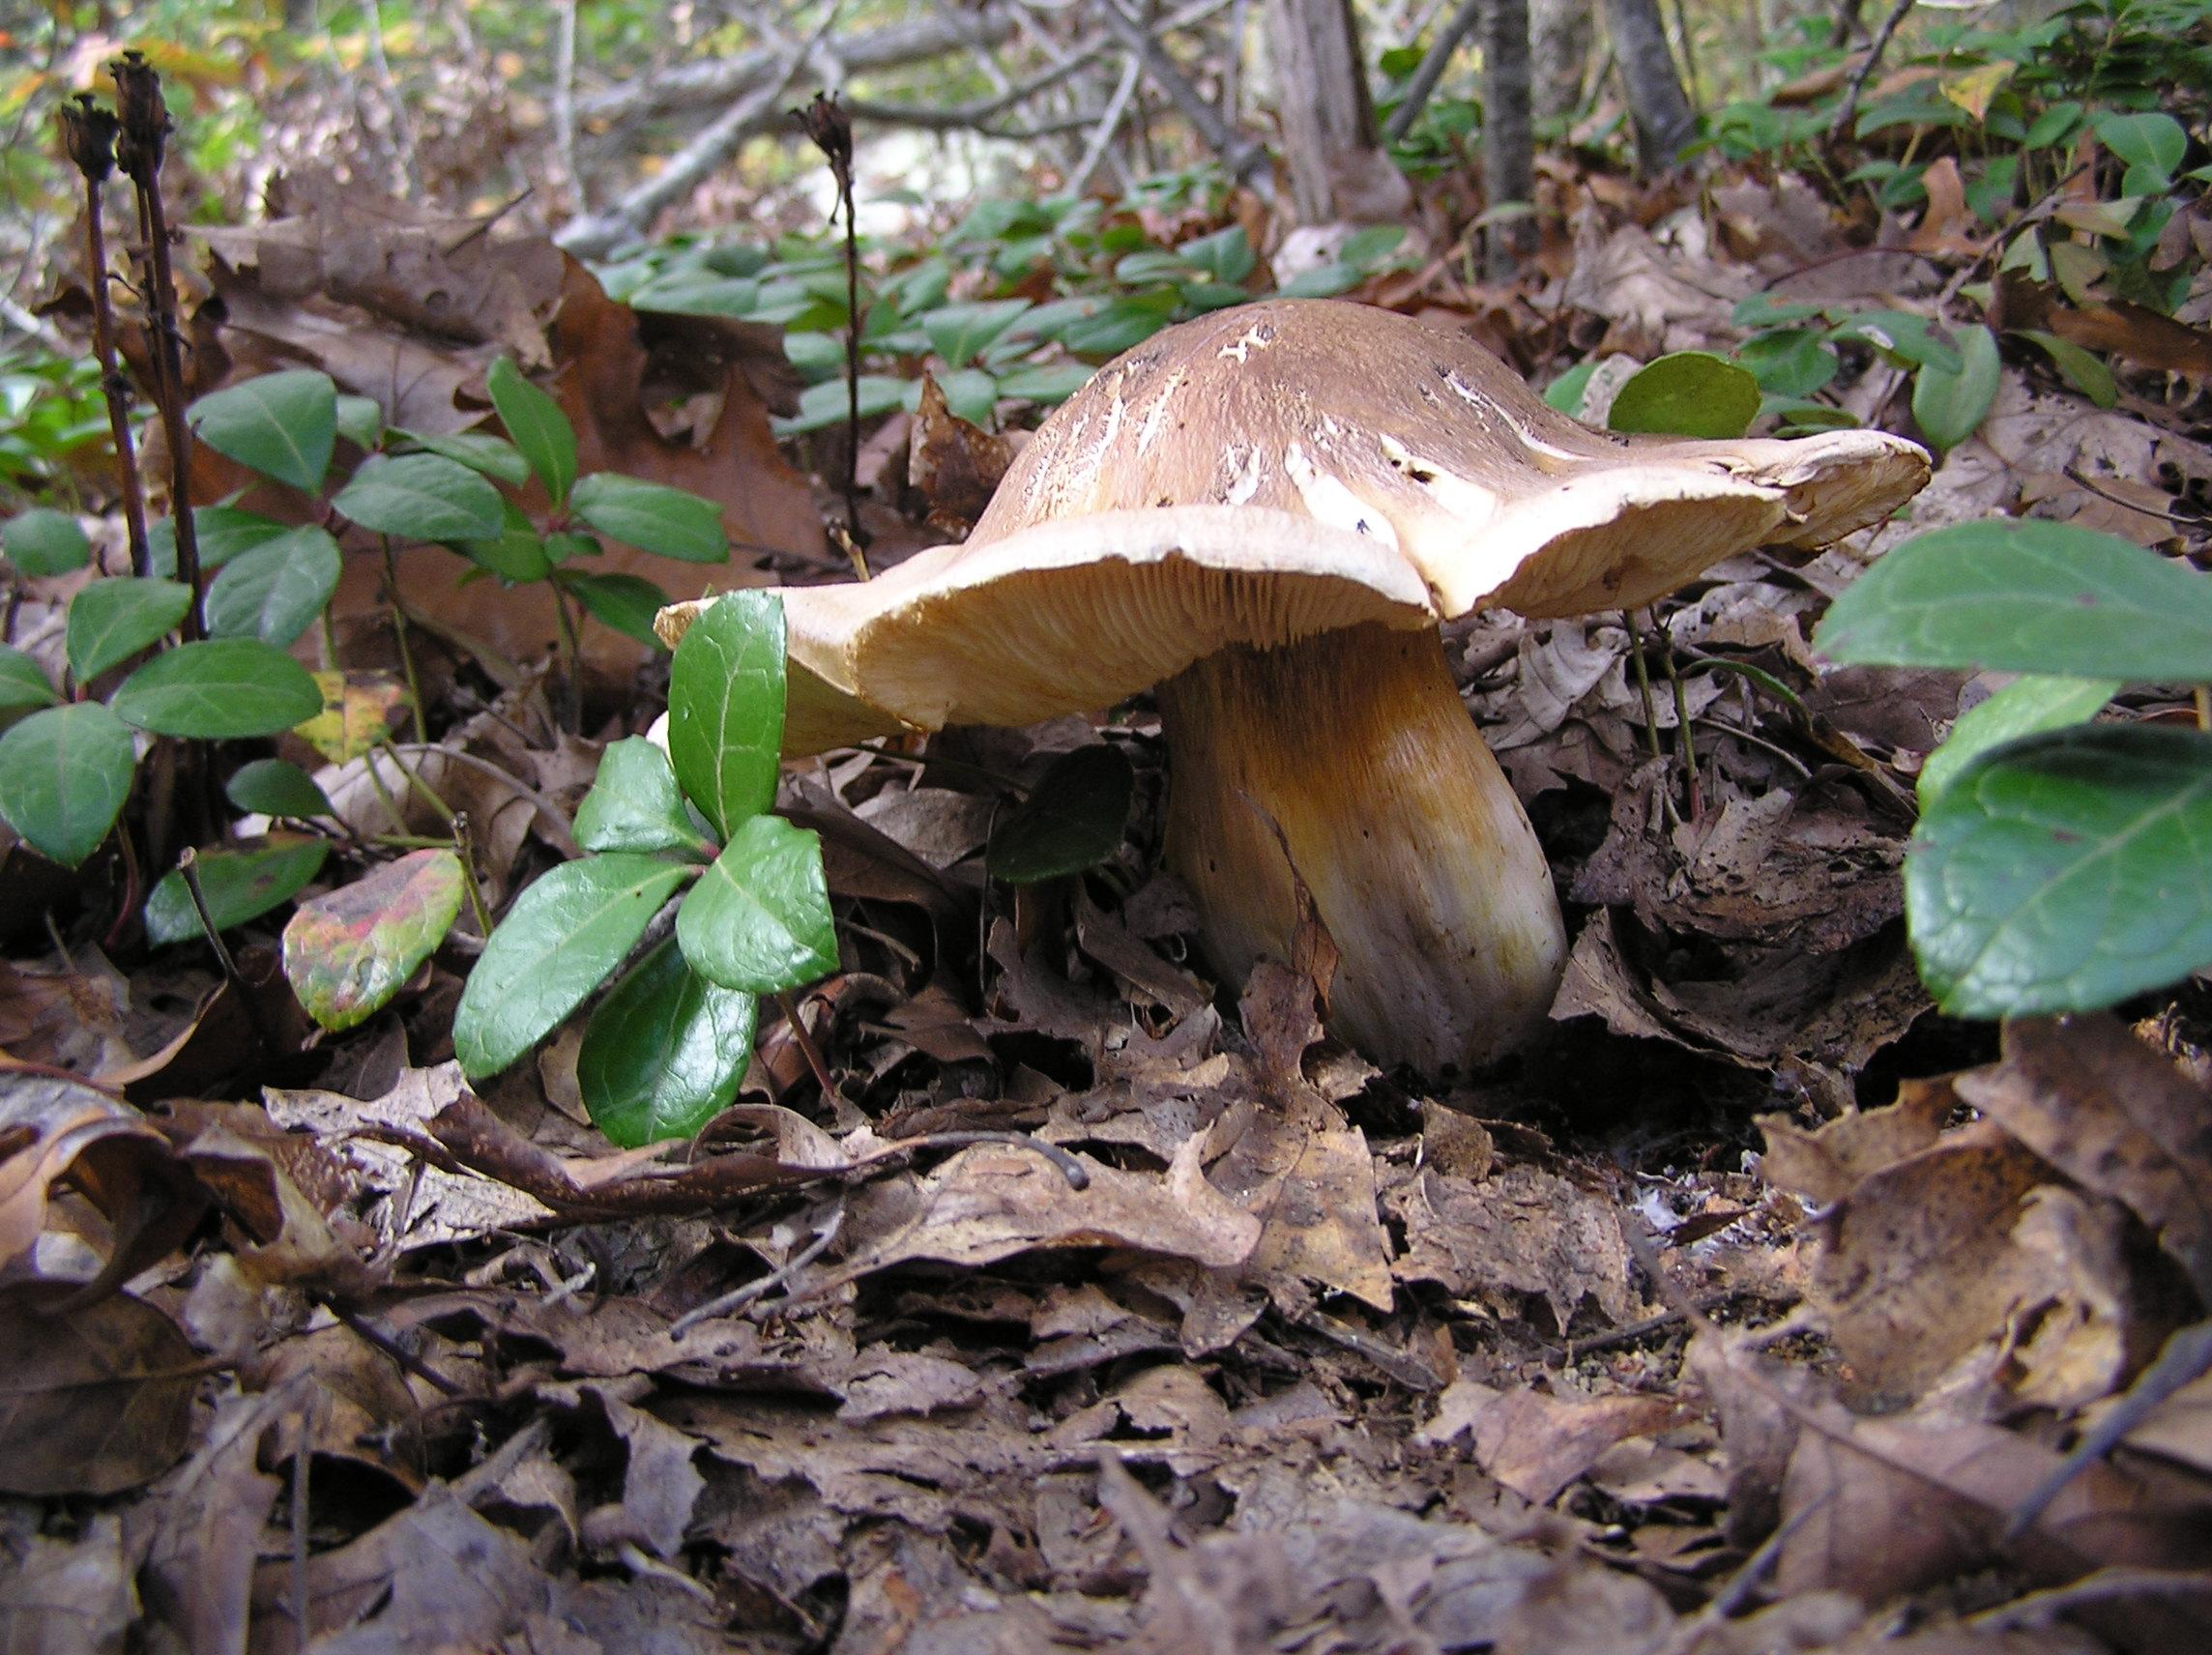 Woodland Mushroom and Tea Leaves (user submitted)